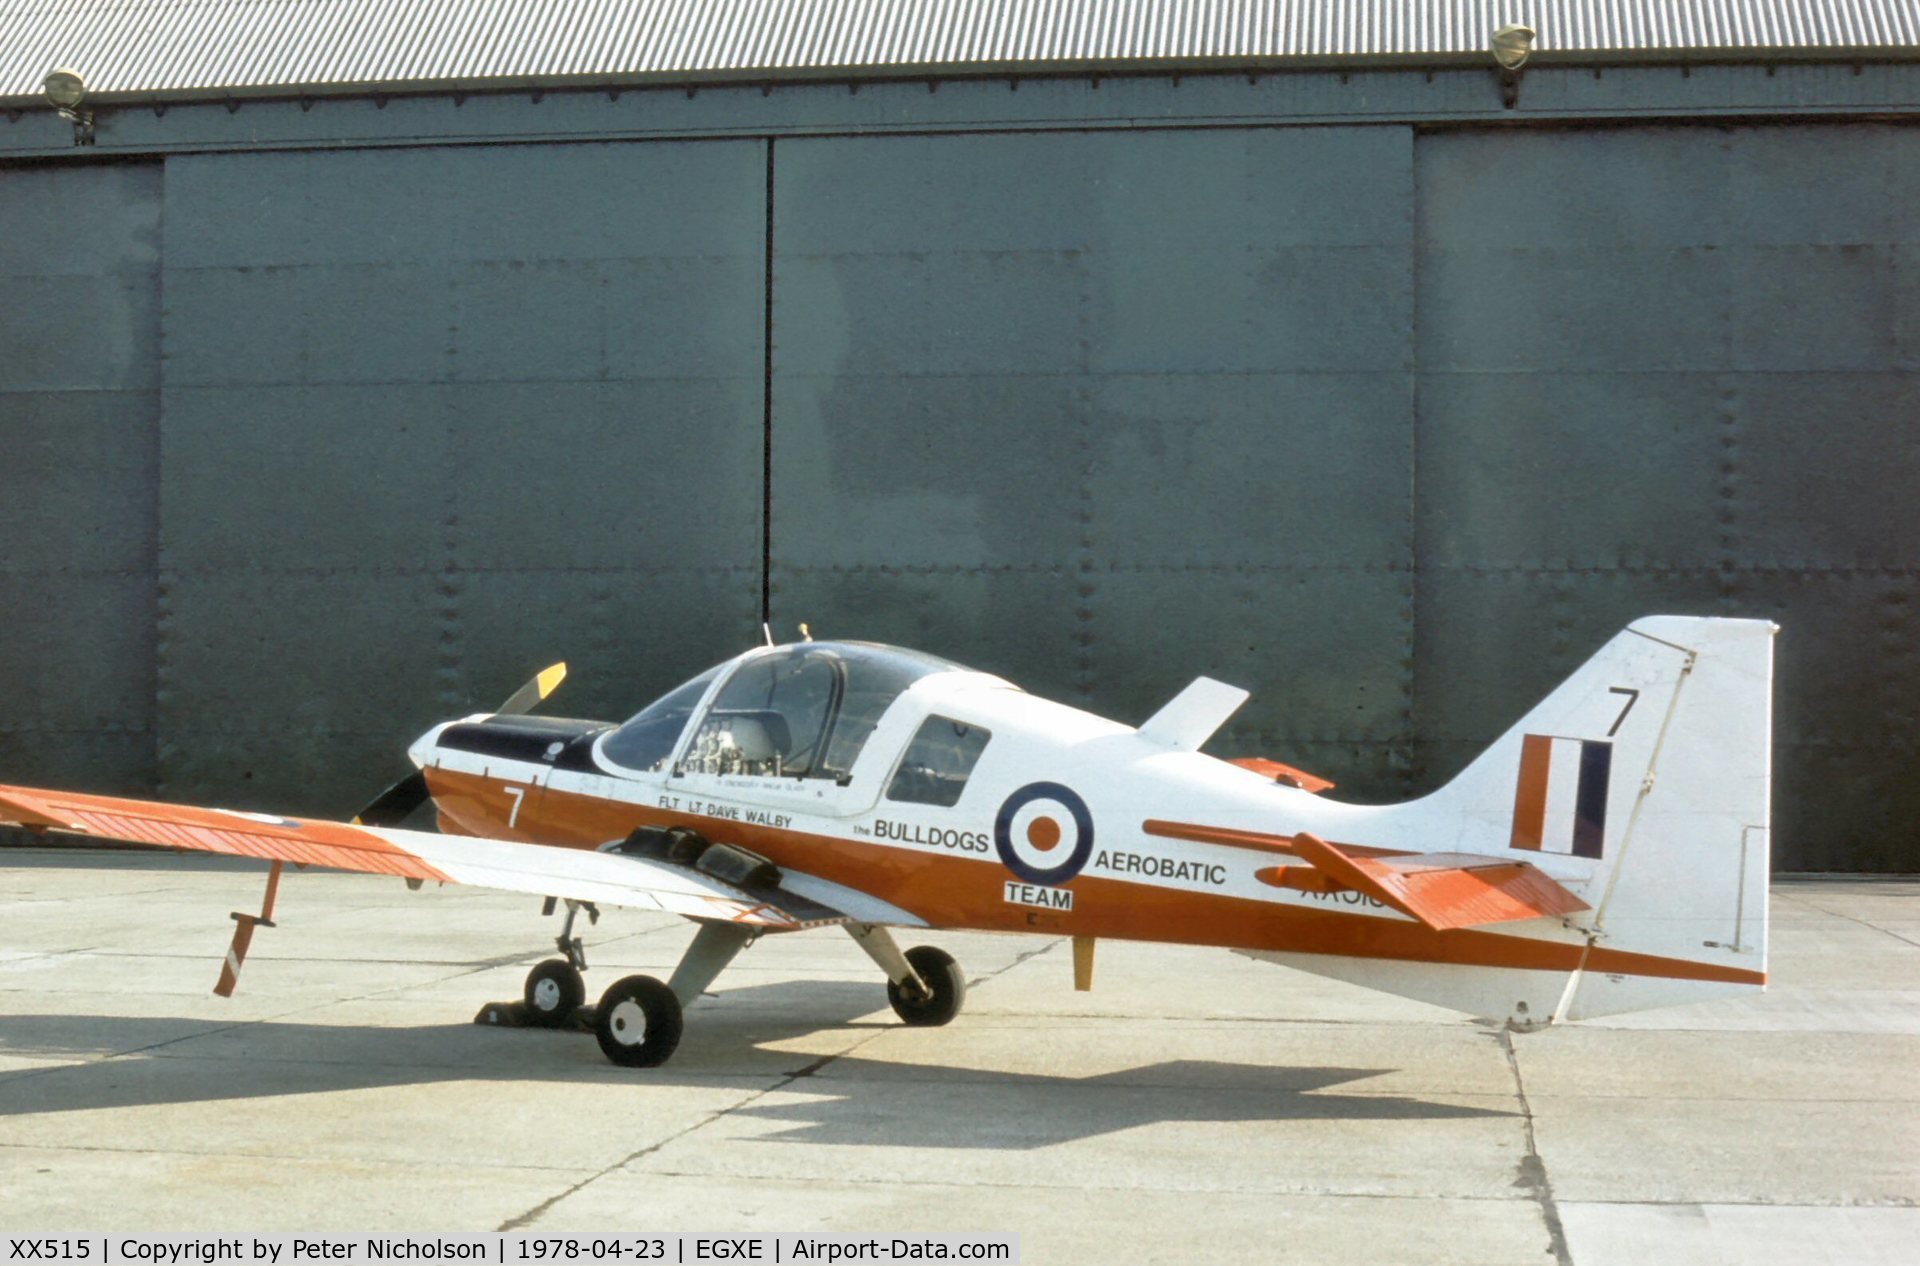 XX515, 1973 Scottish Aviation Bulldog T.1 C/N BH120/201, Bulldog T.1 of the Bulldogs Aerobatic Team on display at the 1978 Leeming Open Day.